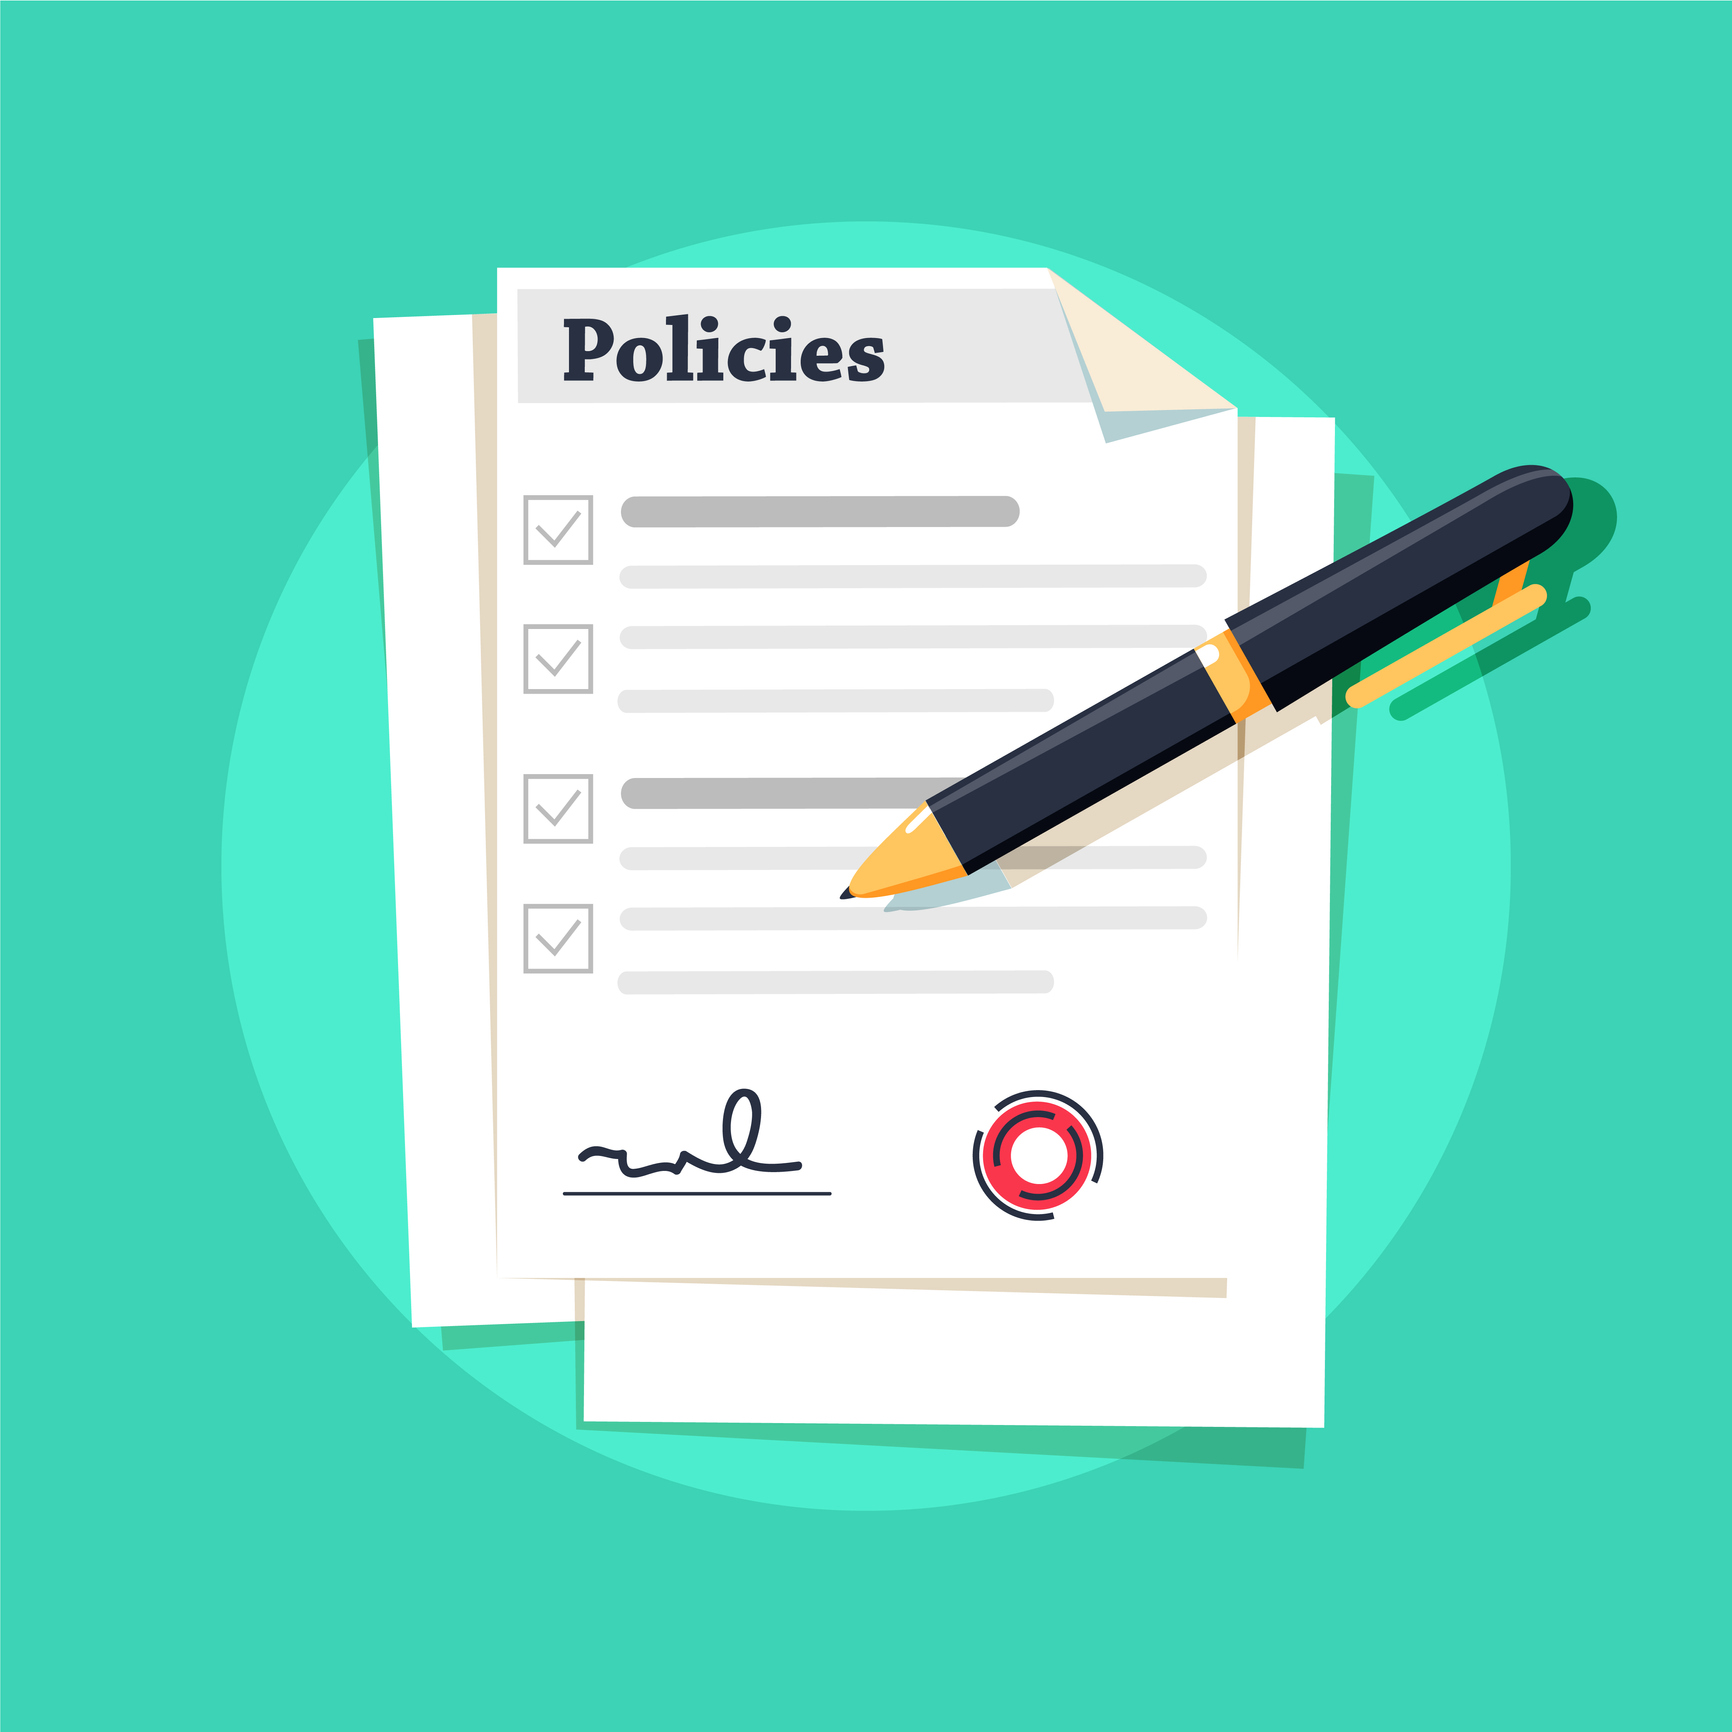 policies-document-policies-regulation-concept-list-document-company